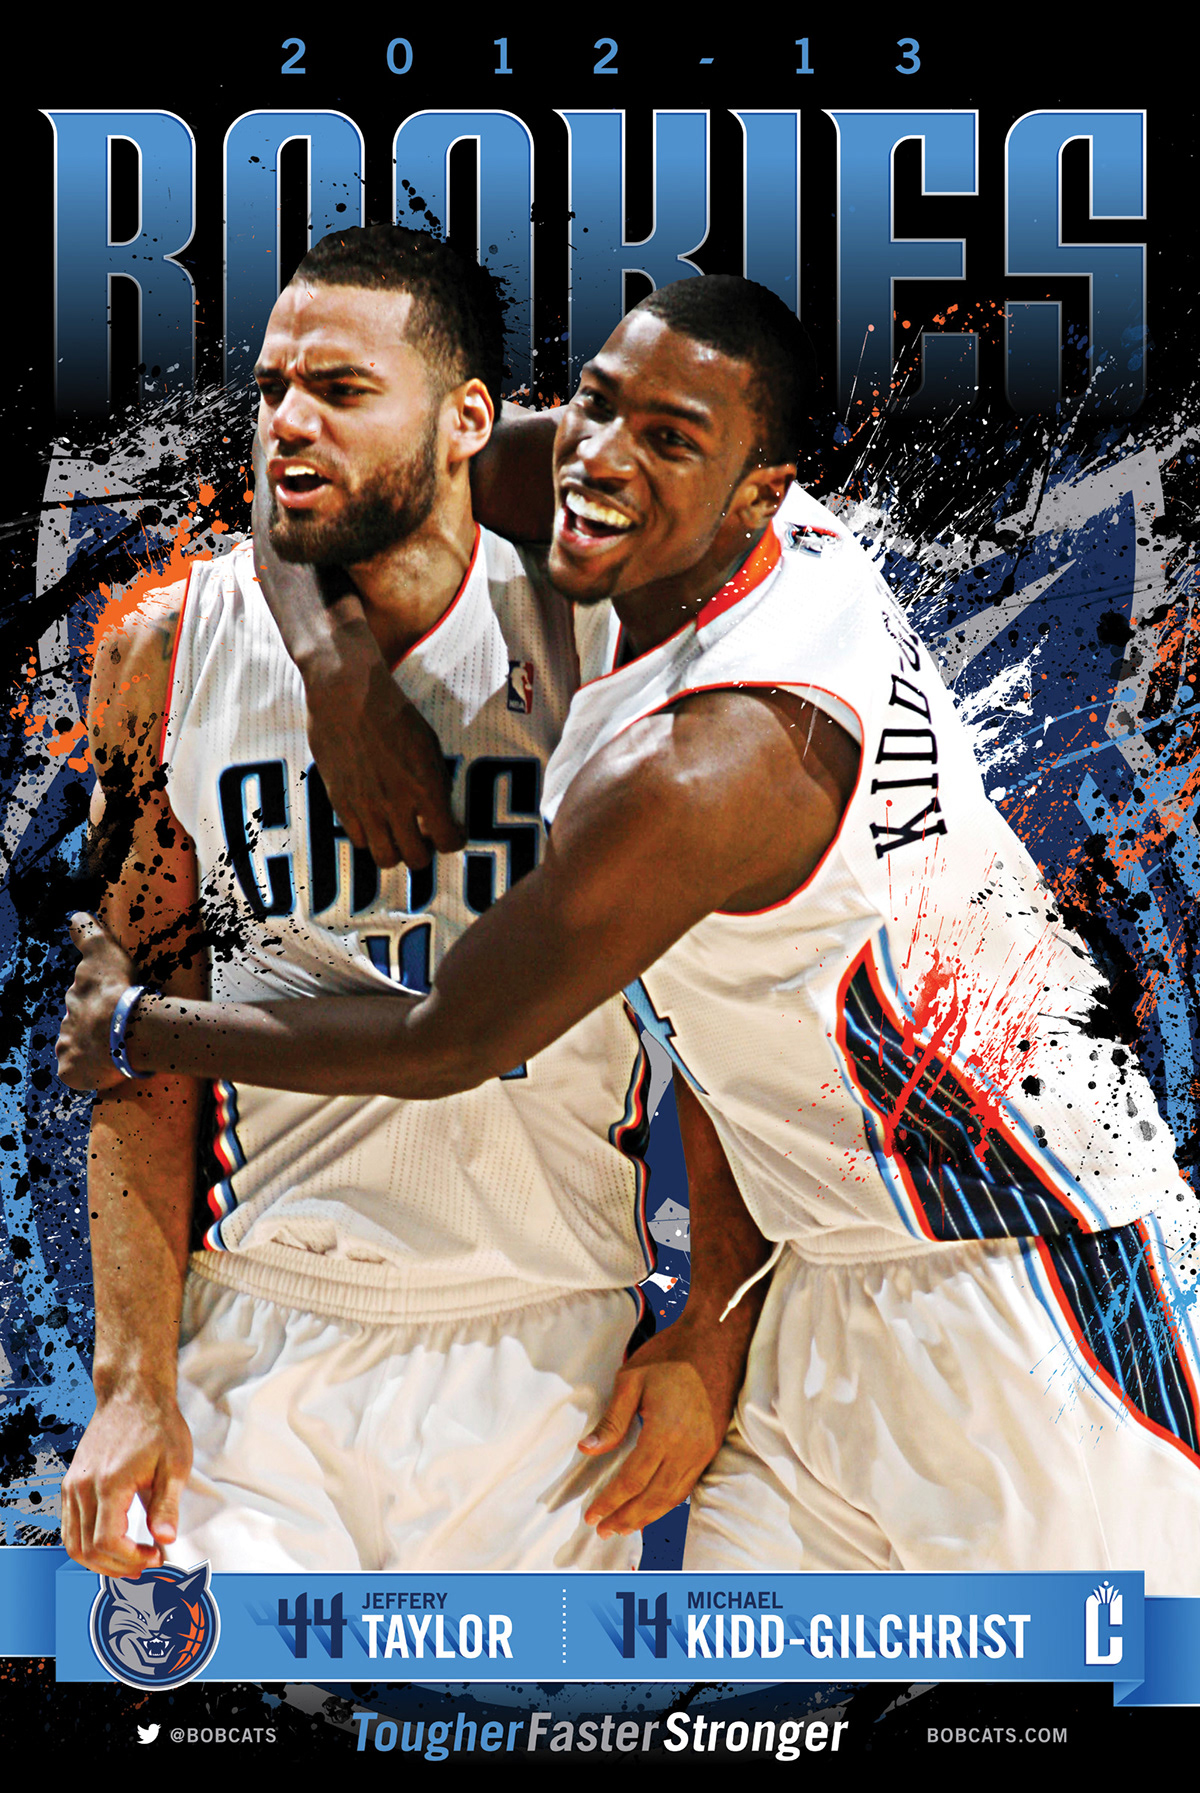 NBA charlotte bobcats basketball Ben Gordon michael kidd-gilchrist jeffery taylor Poster Design apparel online marketing